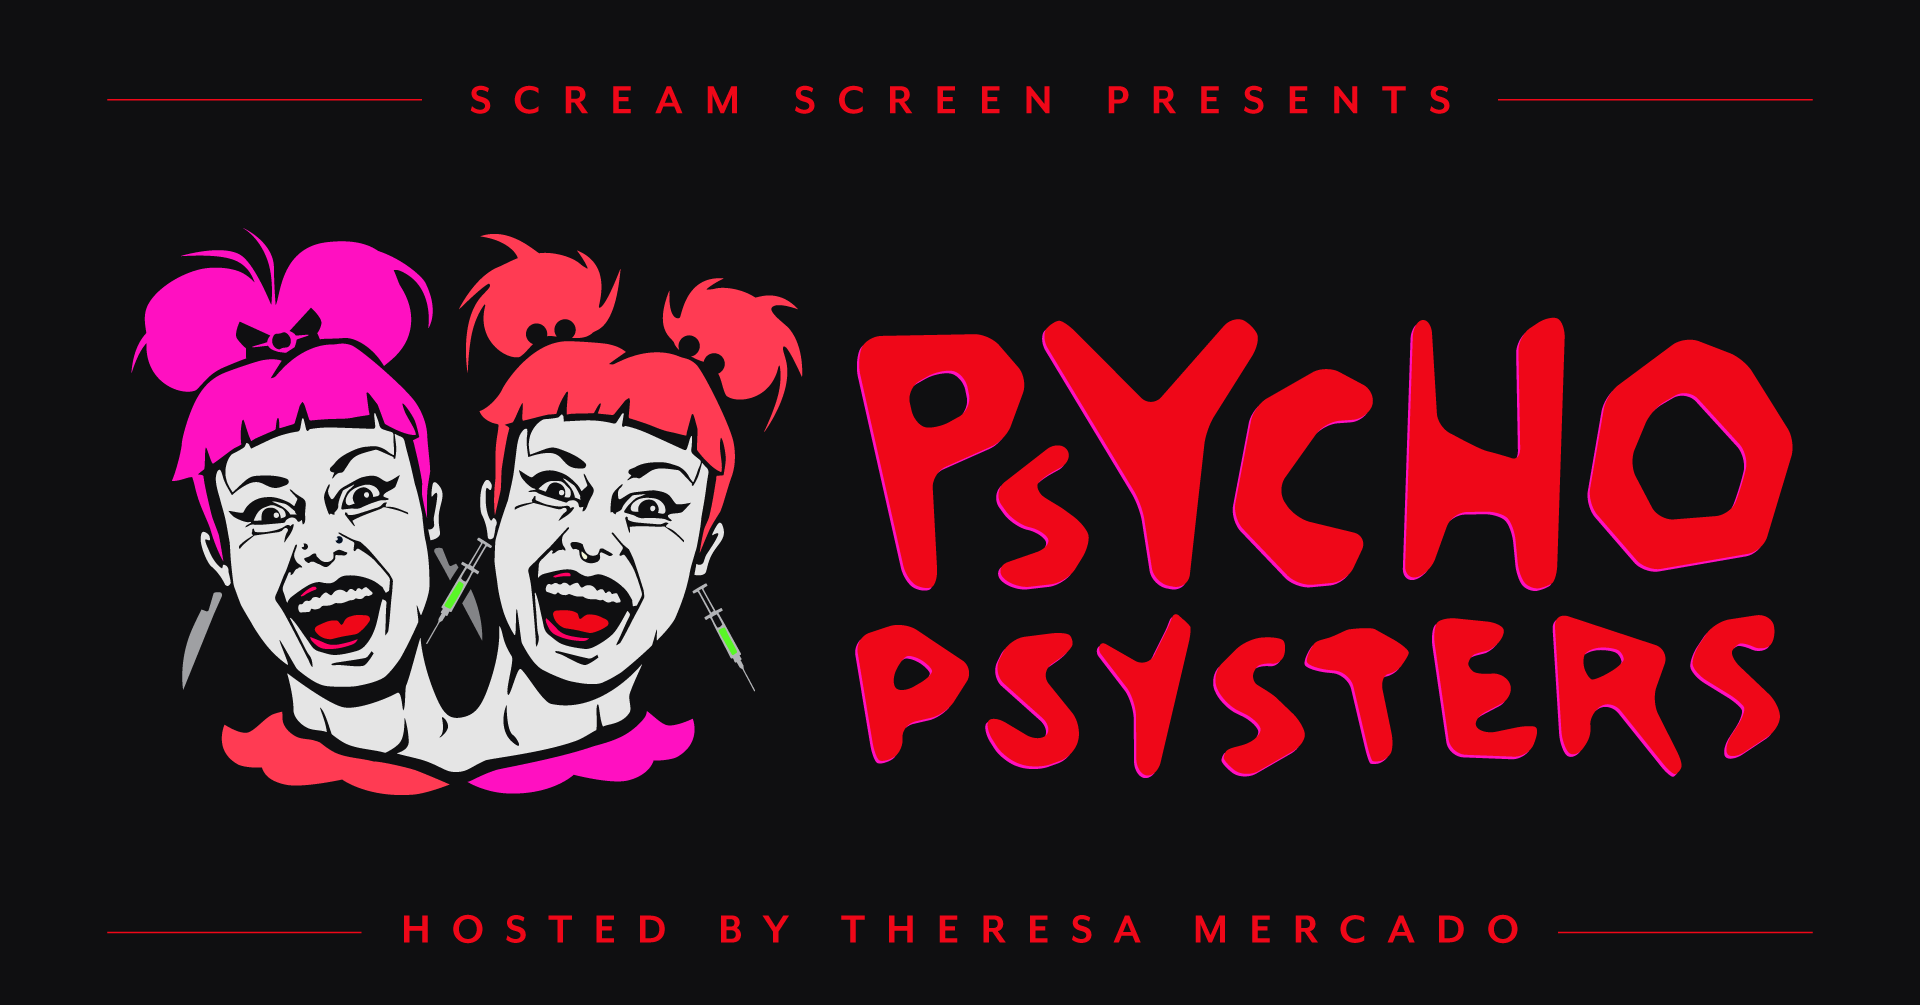 Scream Screen presents: PSYCHO PSYSTERS!